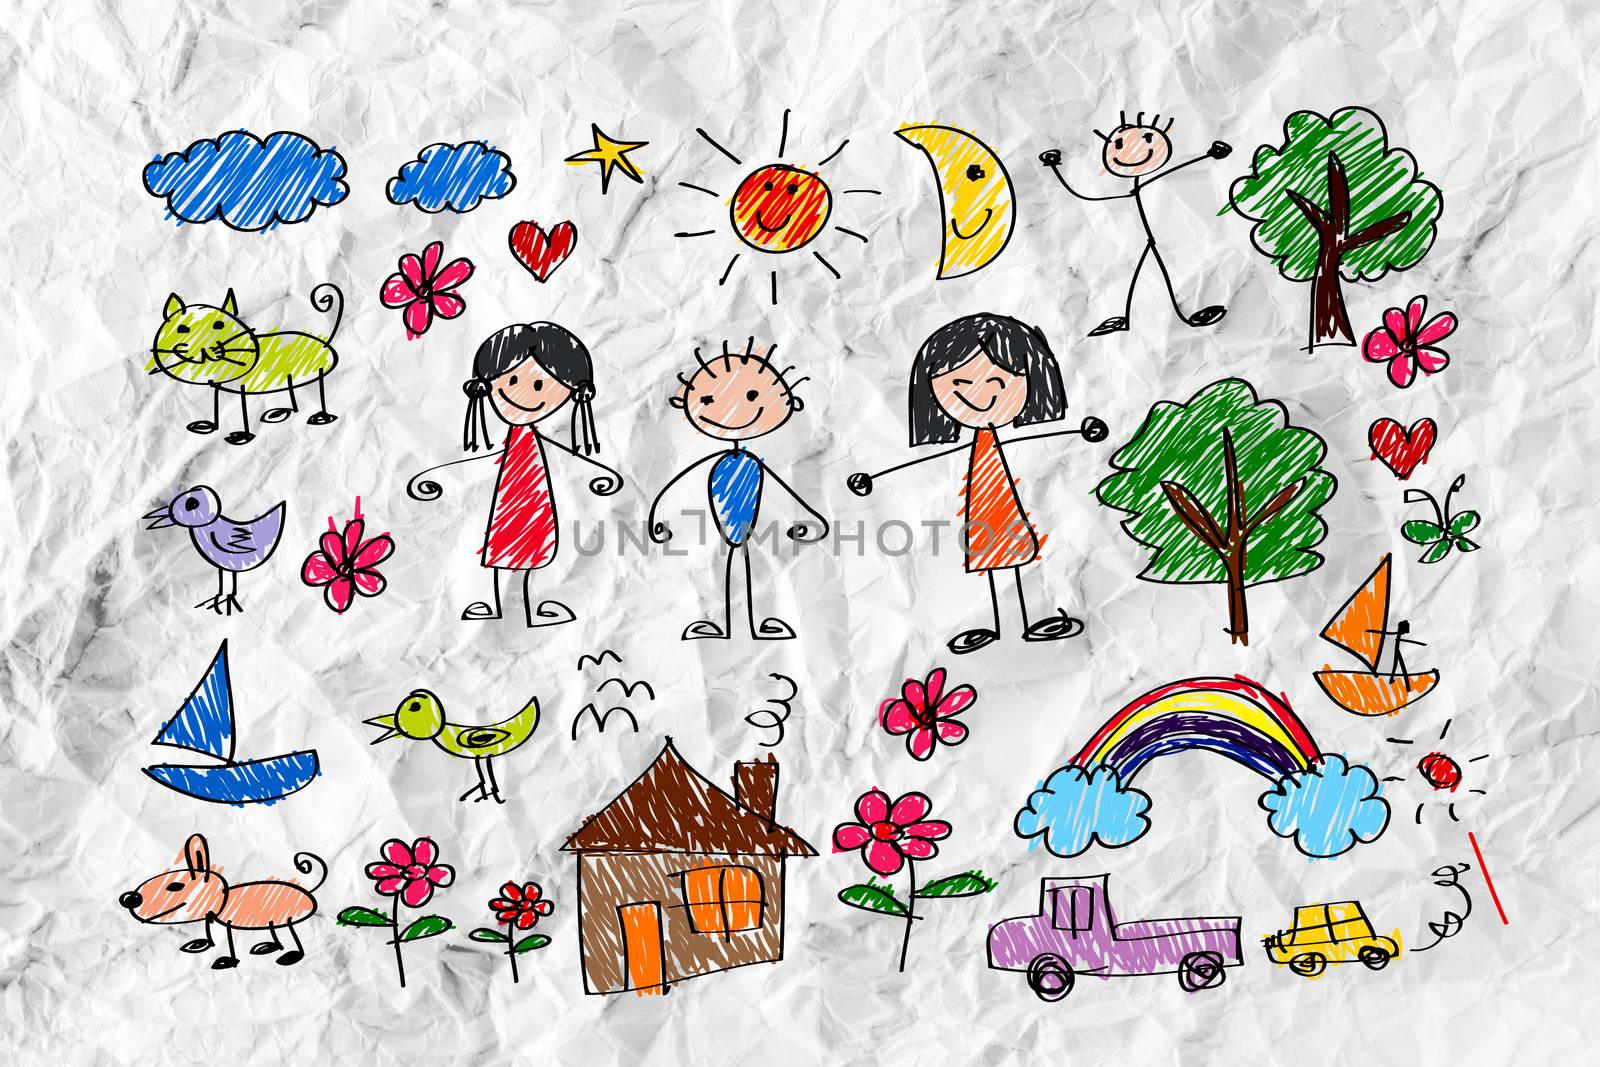 Children's drawings idea design on crumpled paper by kiddaikiddee